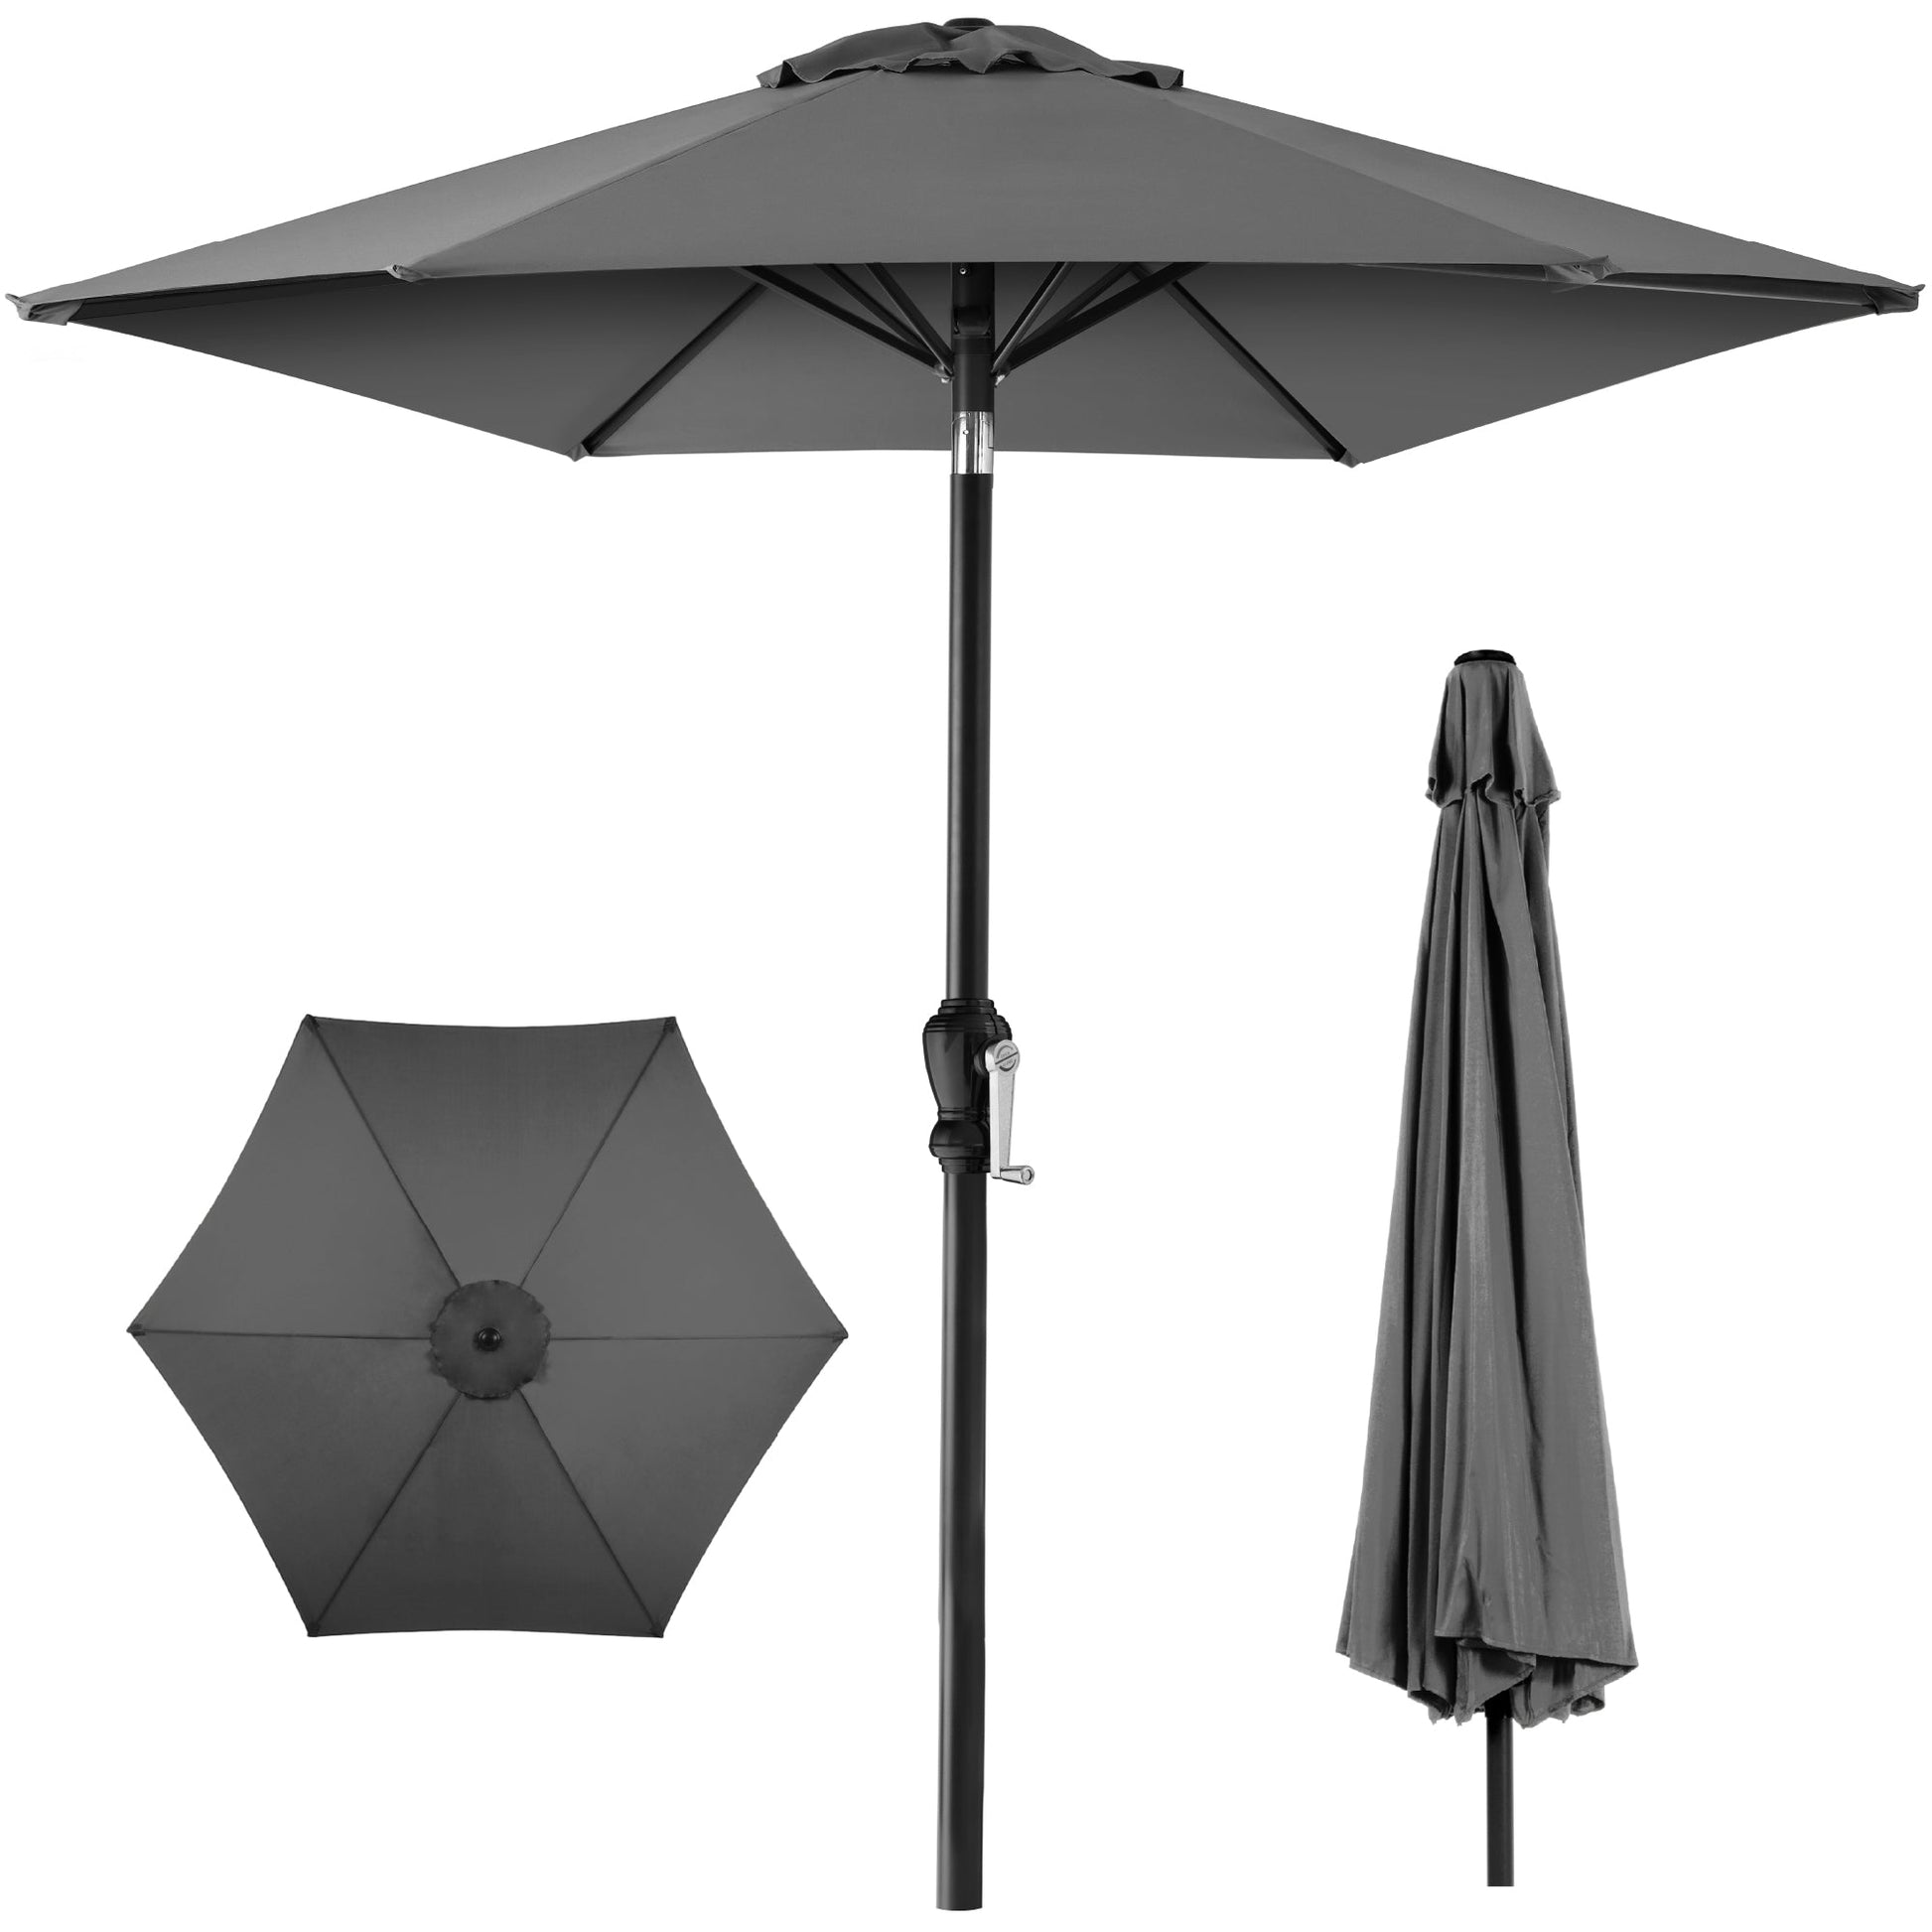 Outdoor Steel Market Patio Umbrella Decoration w/ Tilt, Crank Lift - 10ft